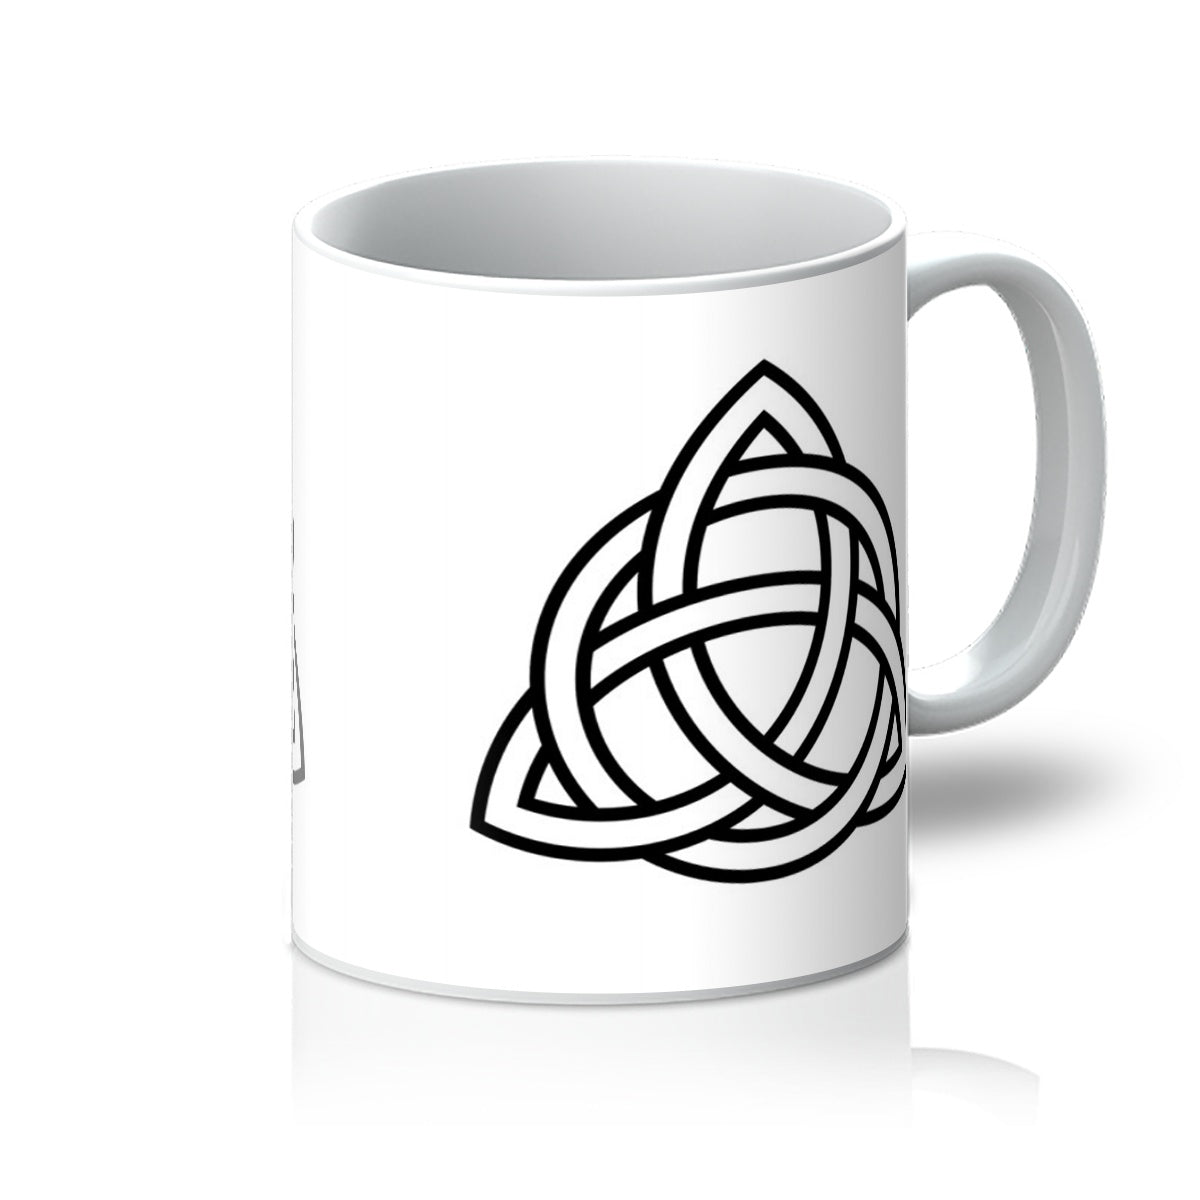 Triangular Celtic Knot Mug